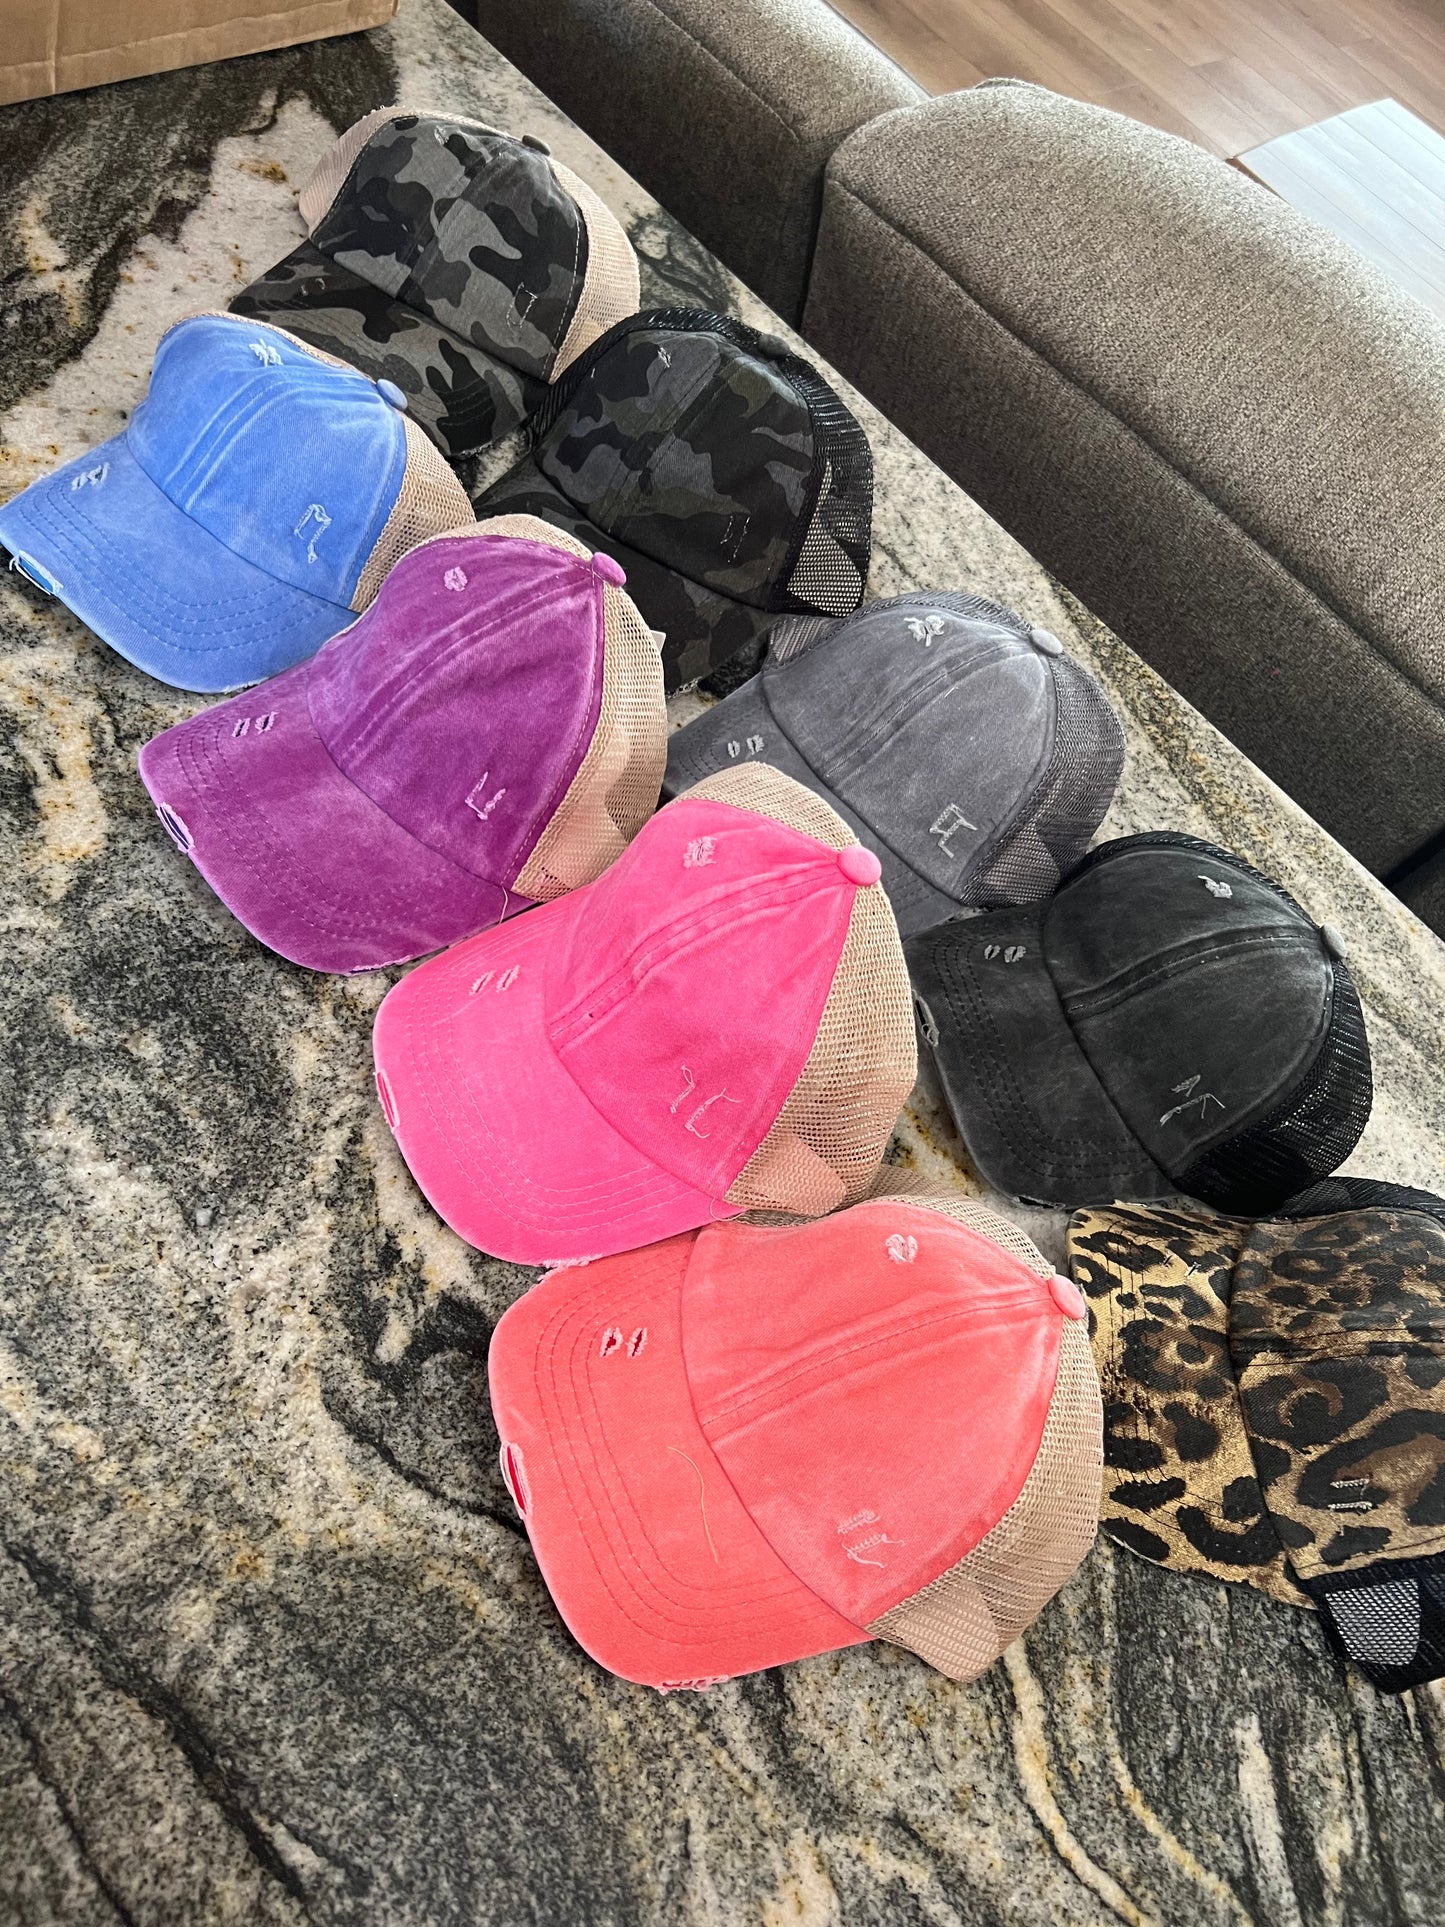 Sombreros de cola de caballo de mezclilla lavada CC (5 colores)